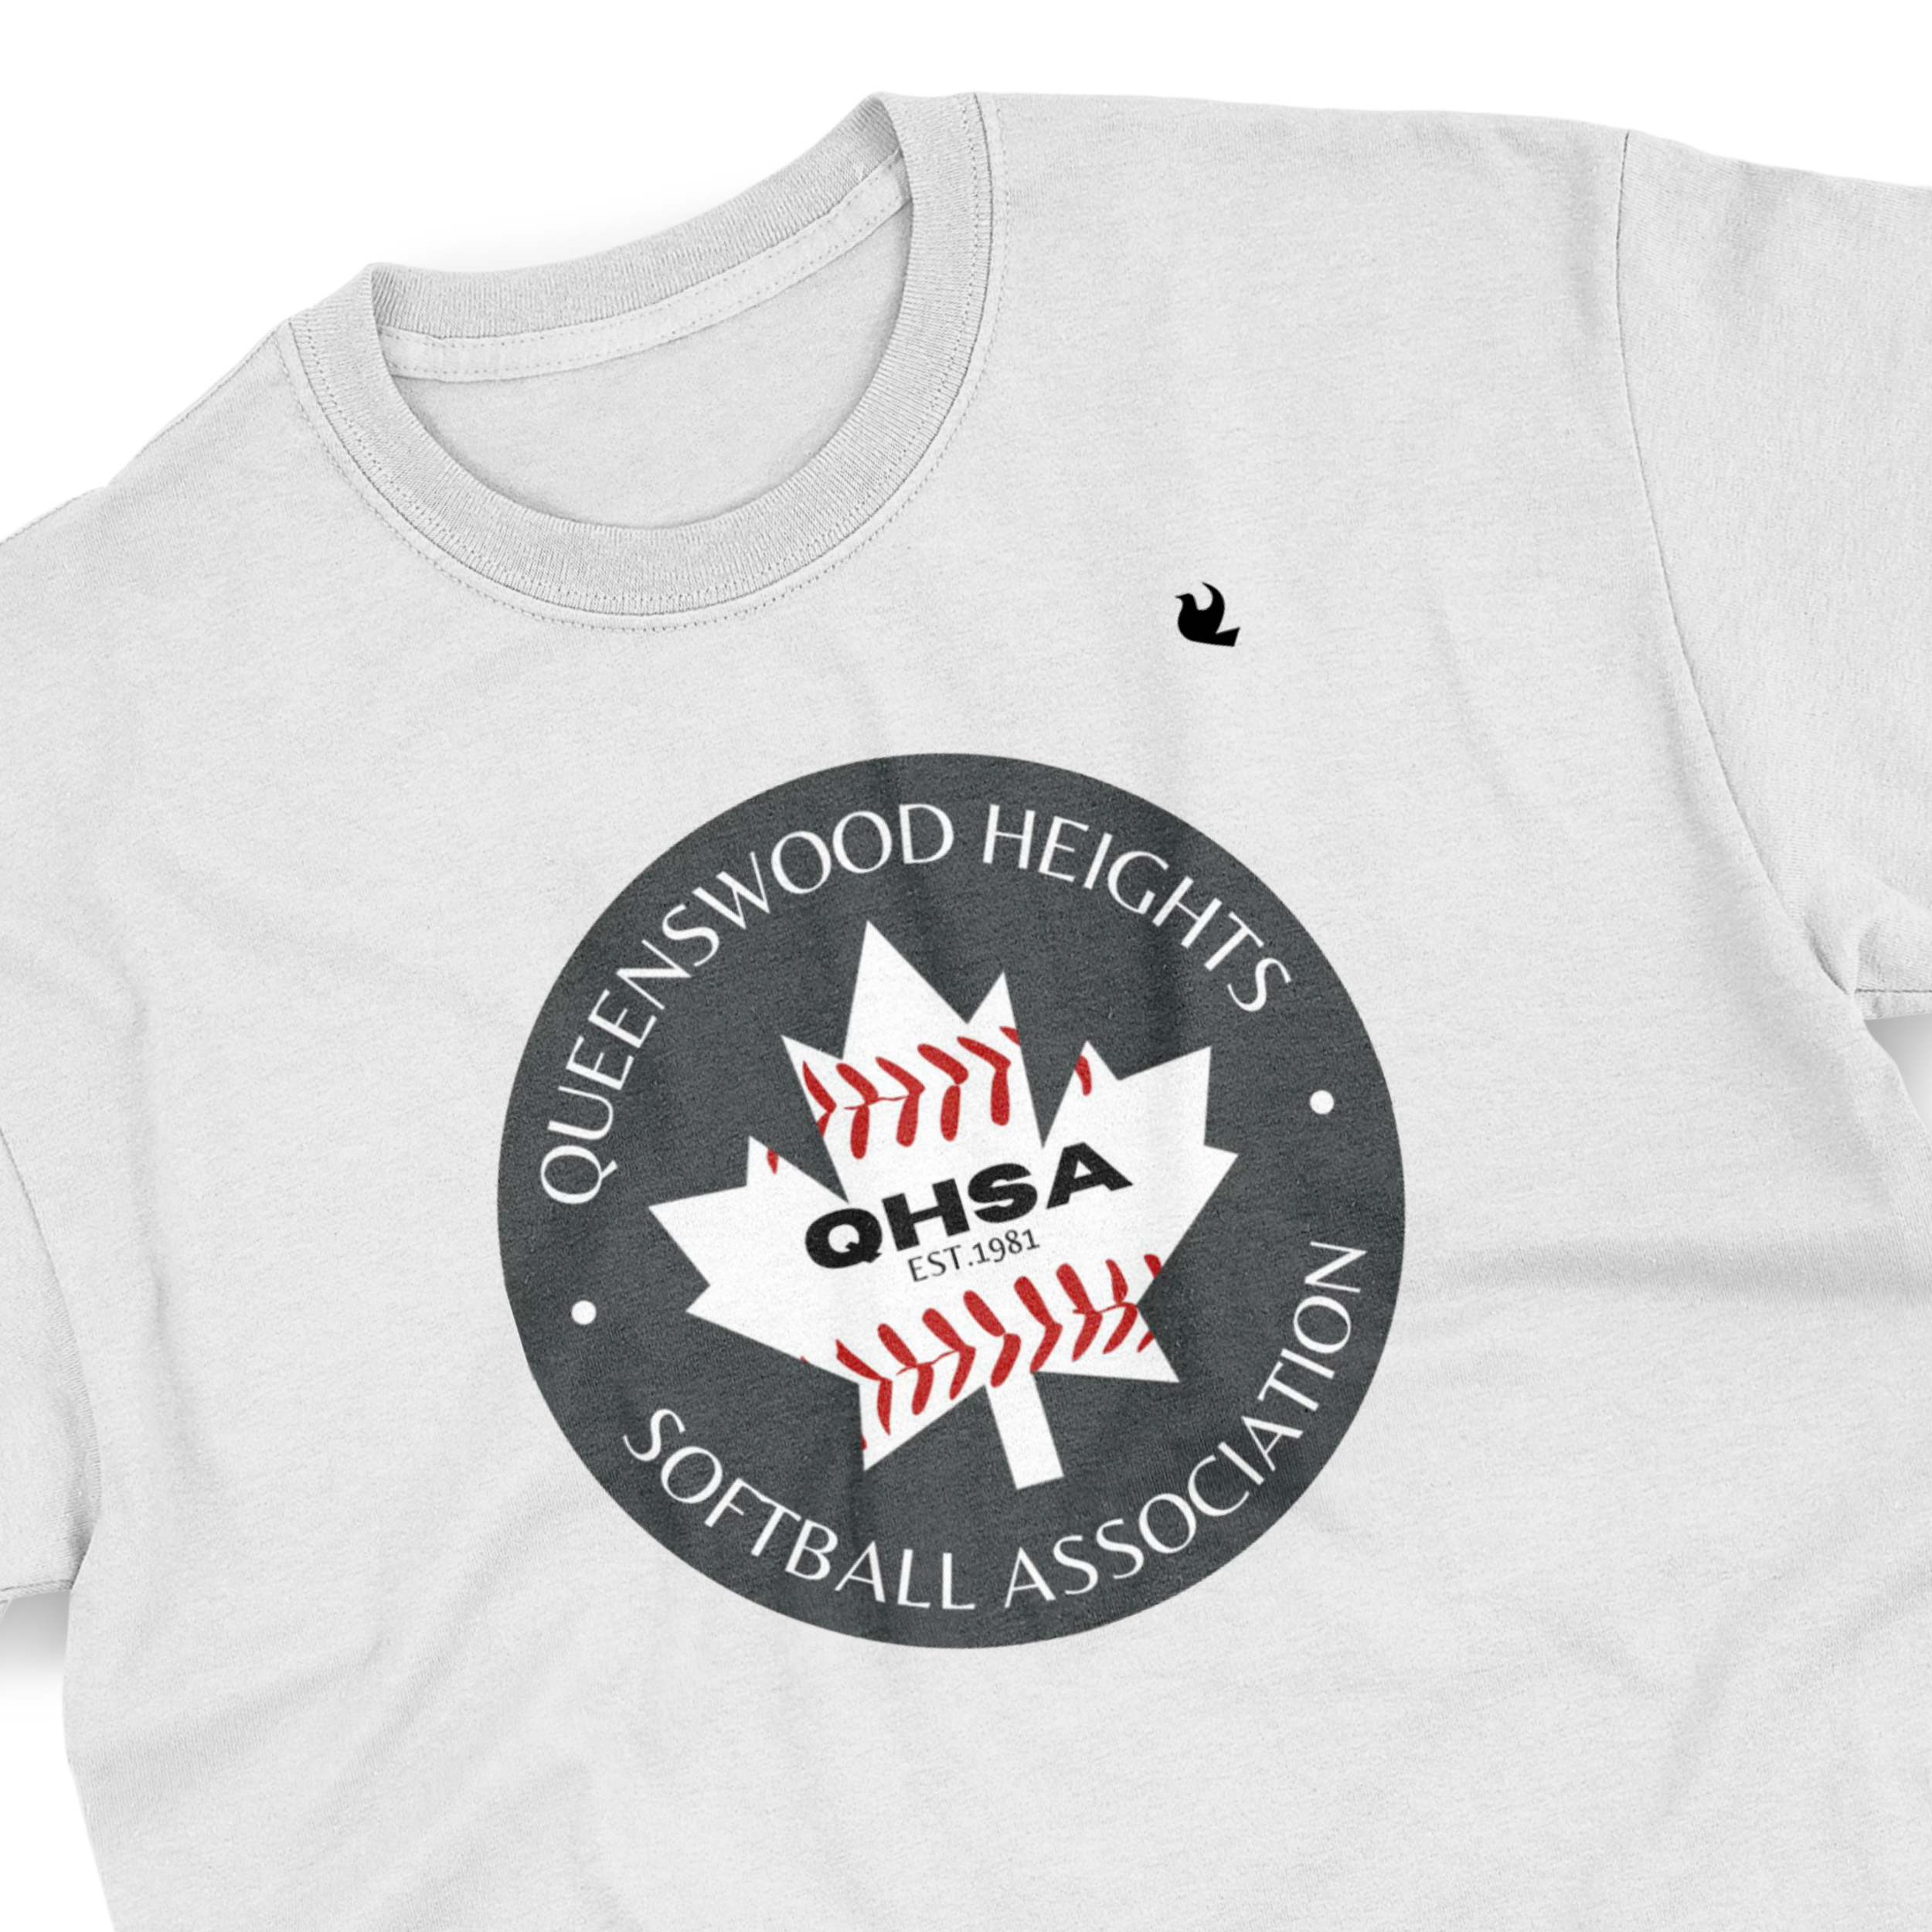 QHSA Softball Classic T-Shirt